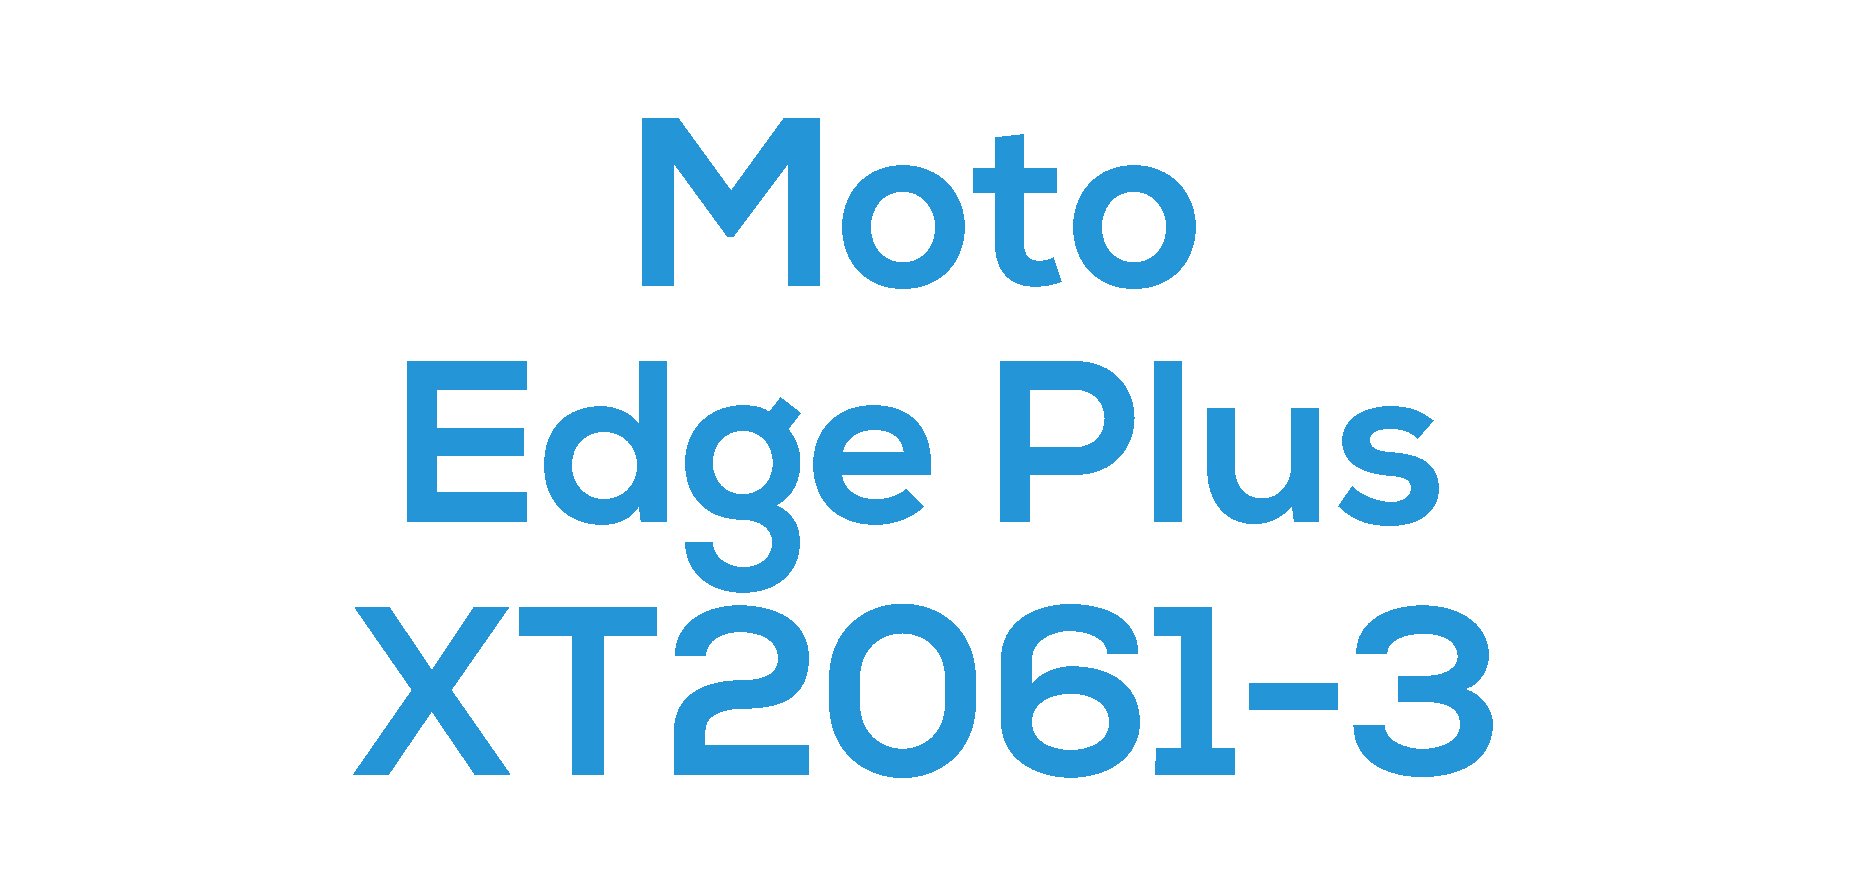 Edge Plus 2020 (XT2061-3)